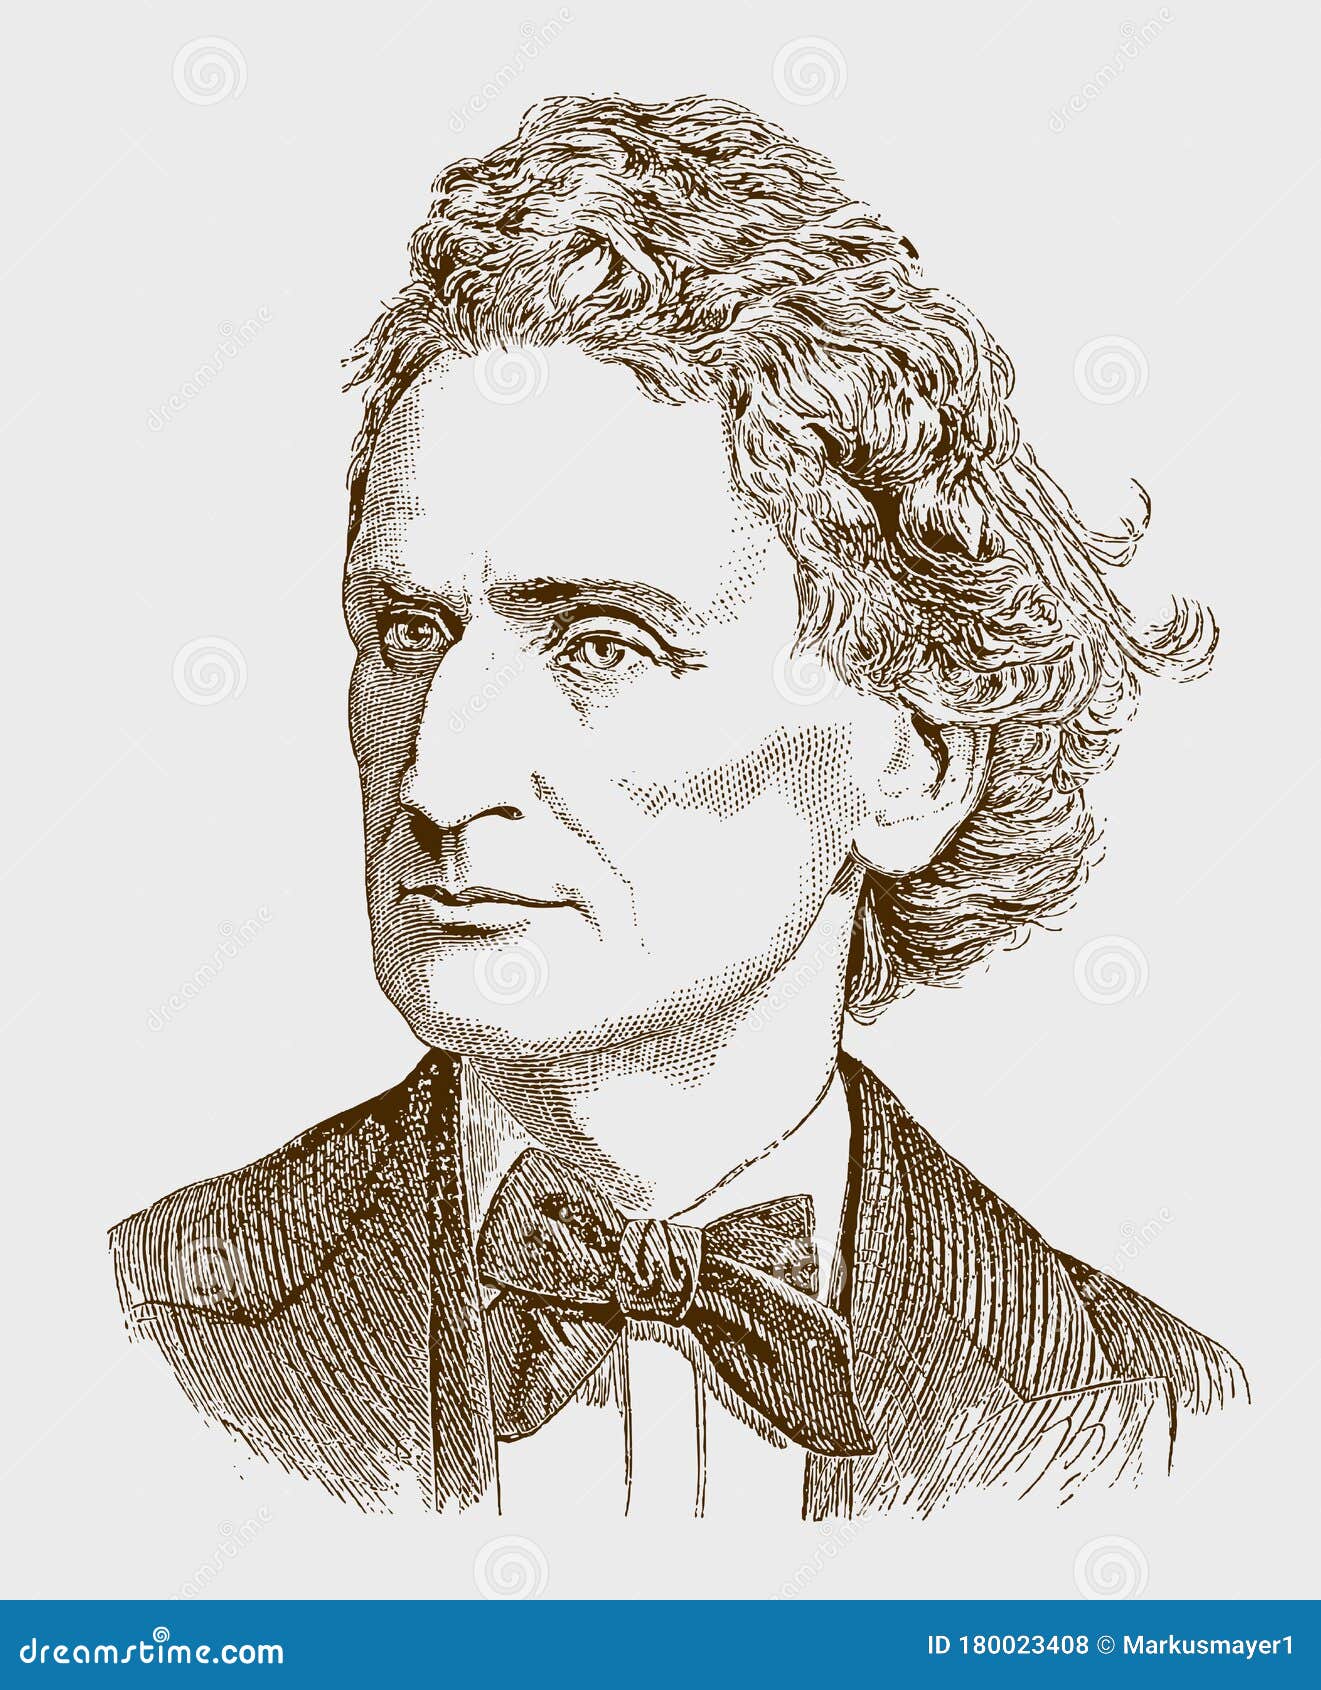 historical portrait of james dwight dana the american scientist